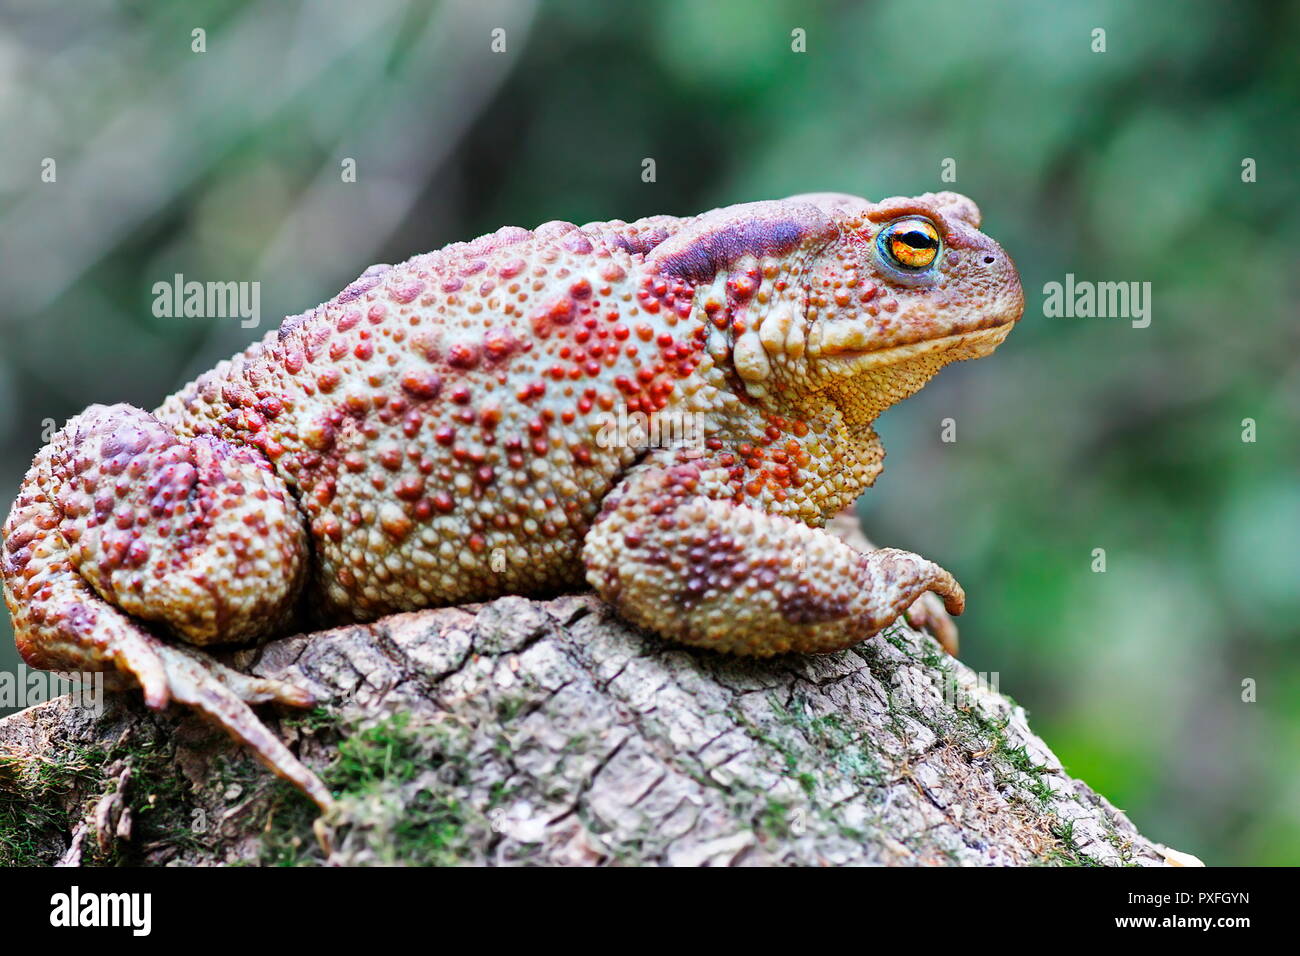 large european brown toad standing on stump ( Bufo bufo, female ) Stock Photo